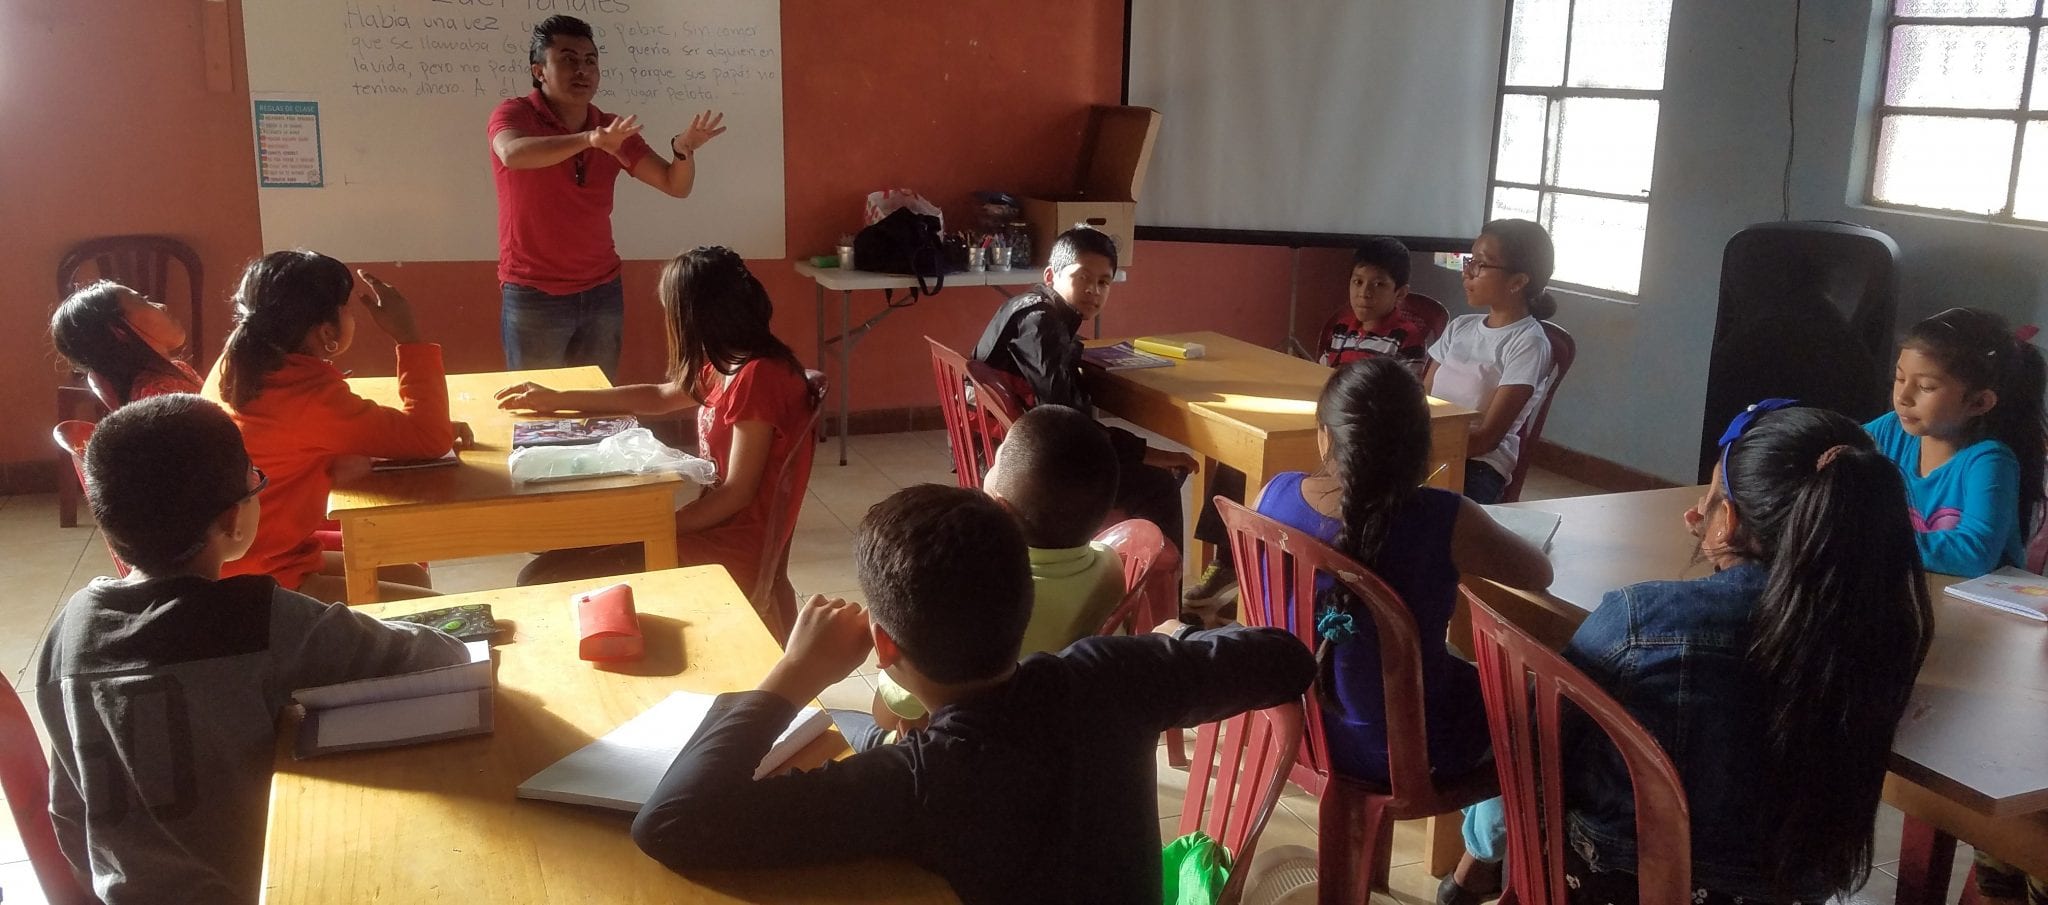 Eduardo teaching math class at our community center in colonia santa fe